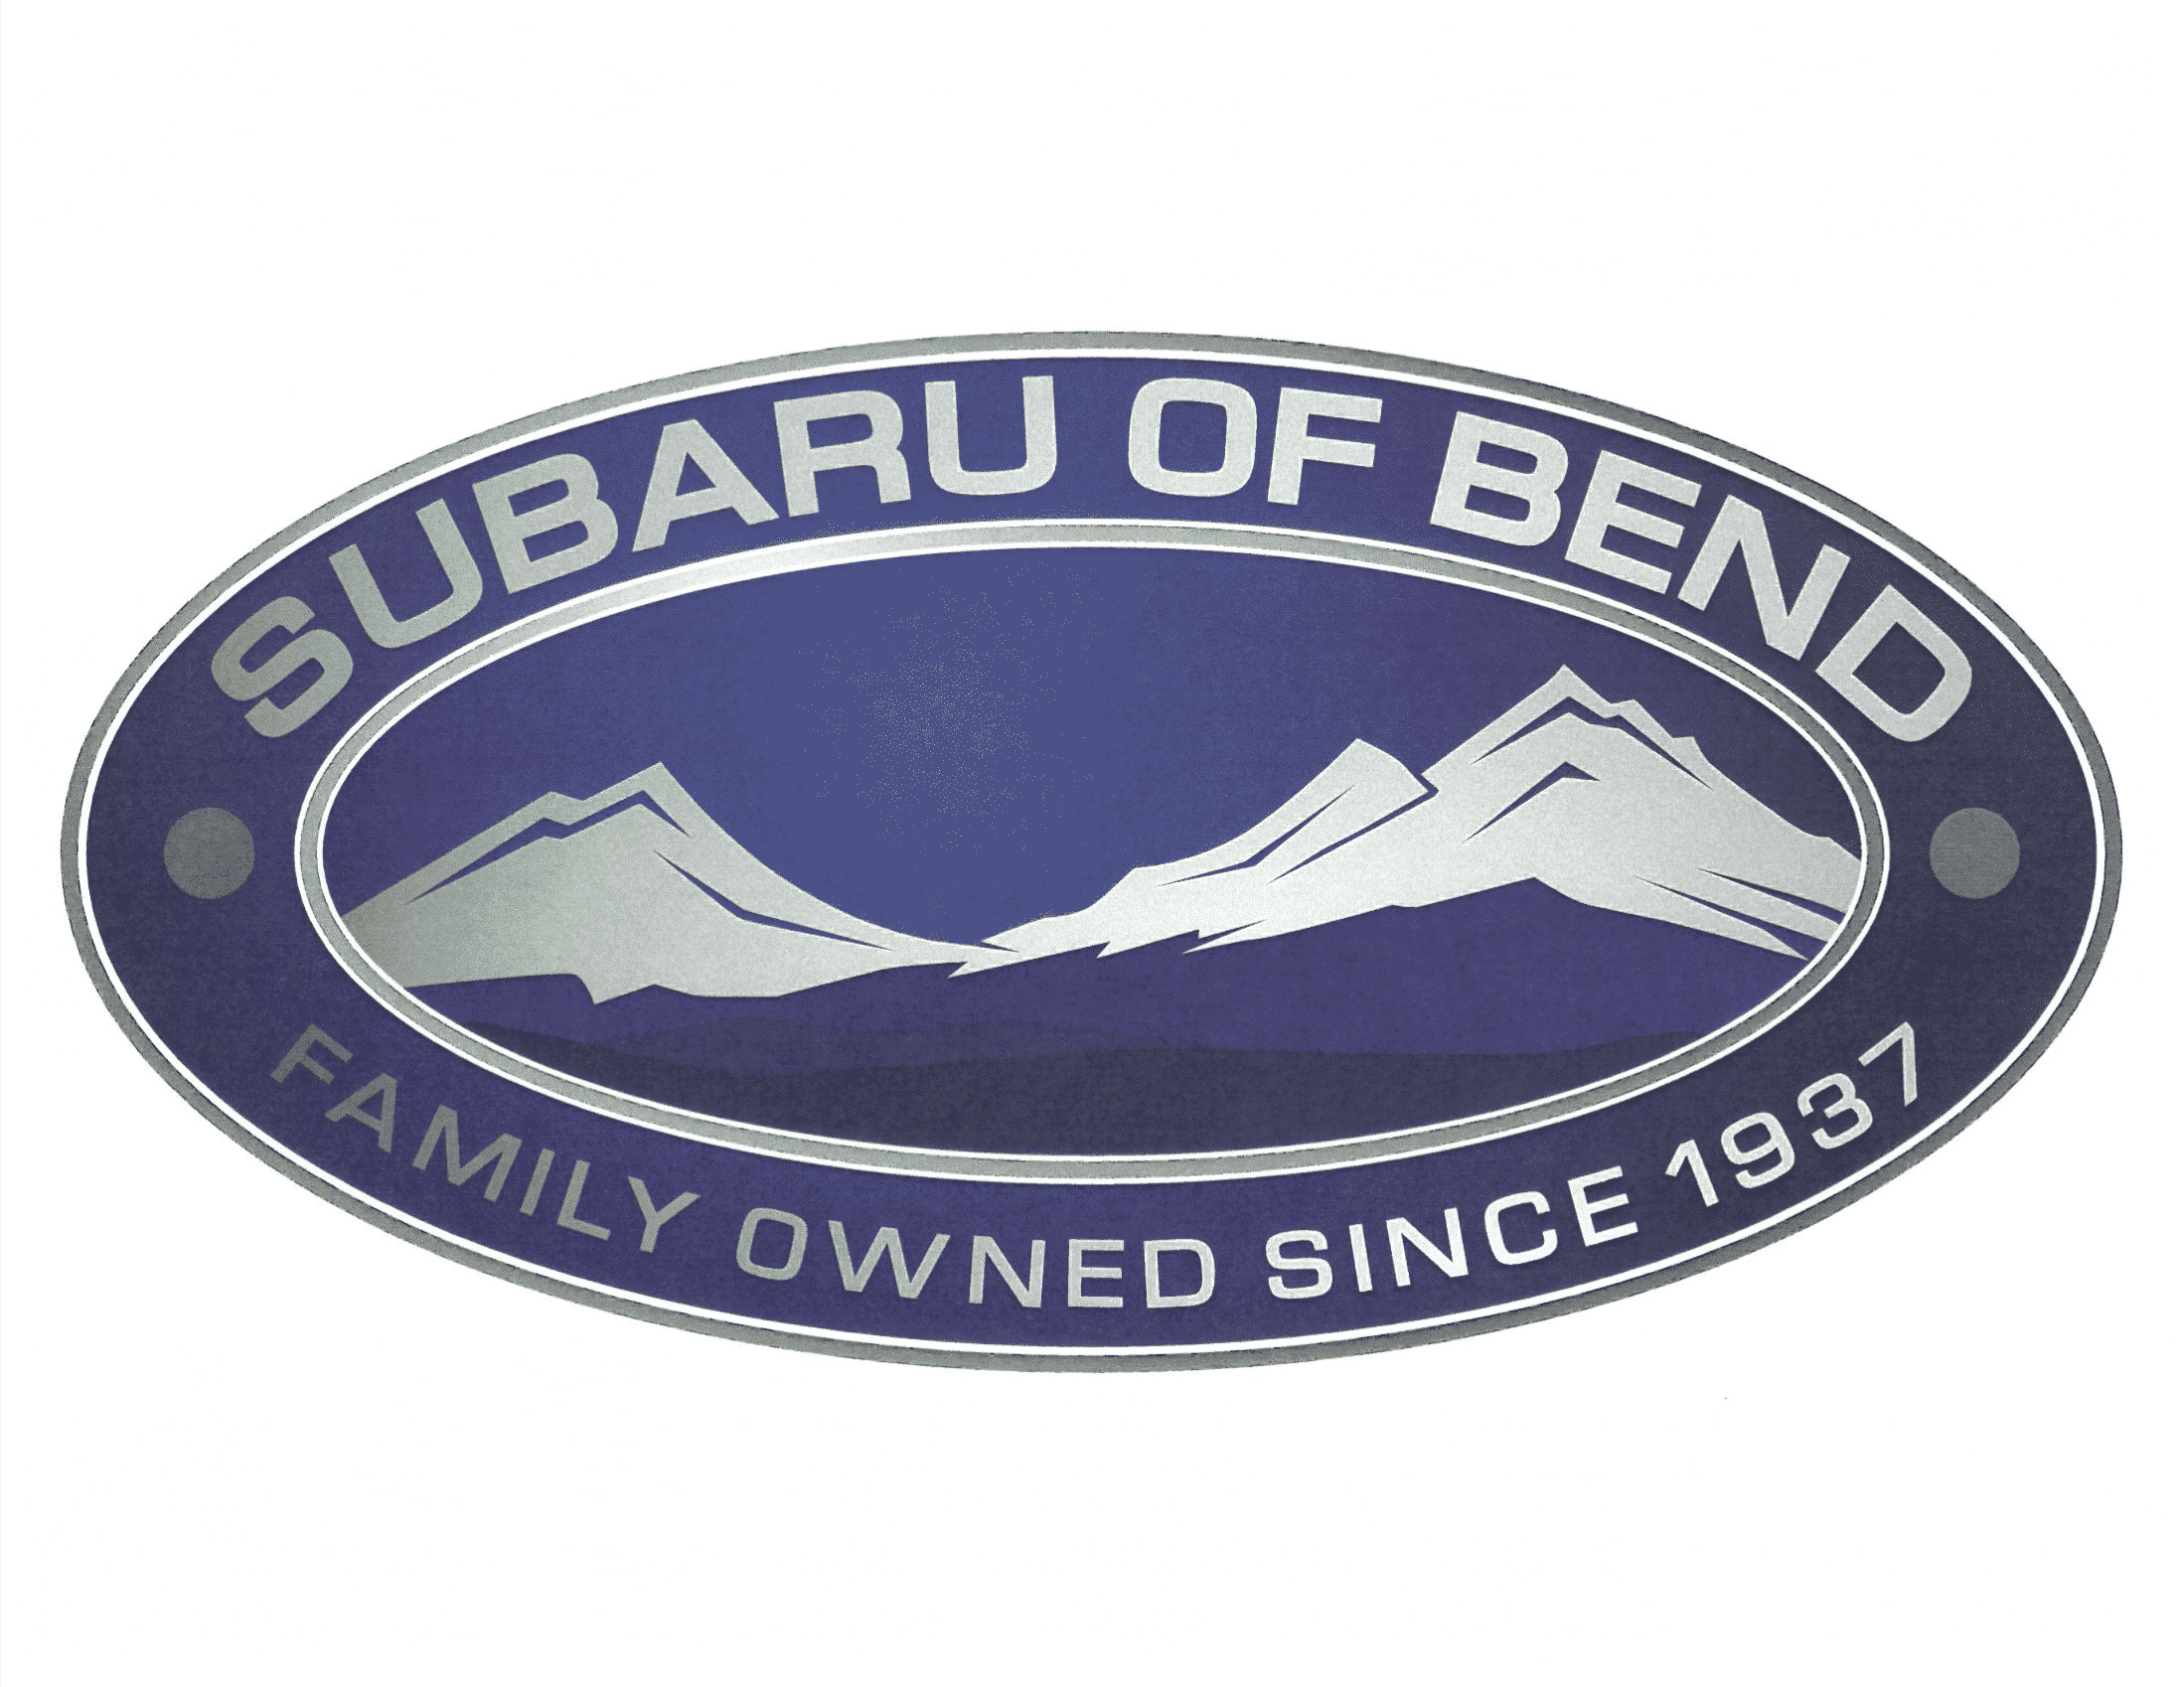 Subaru-of-bend-logo